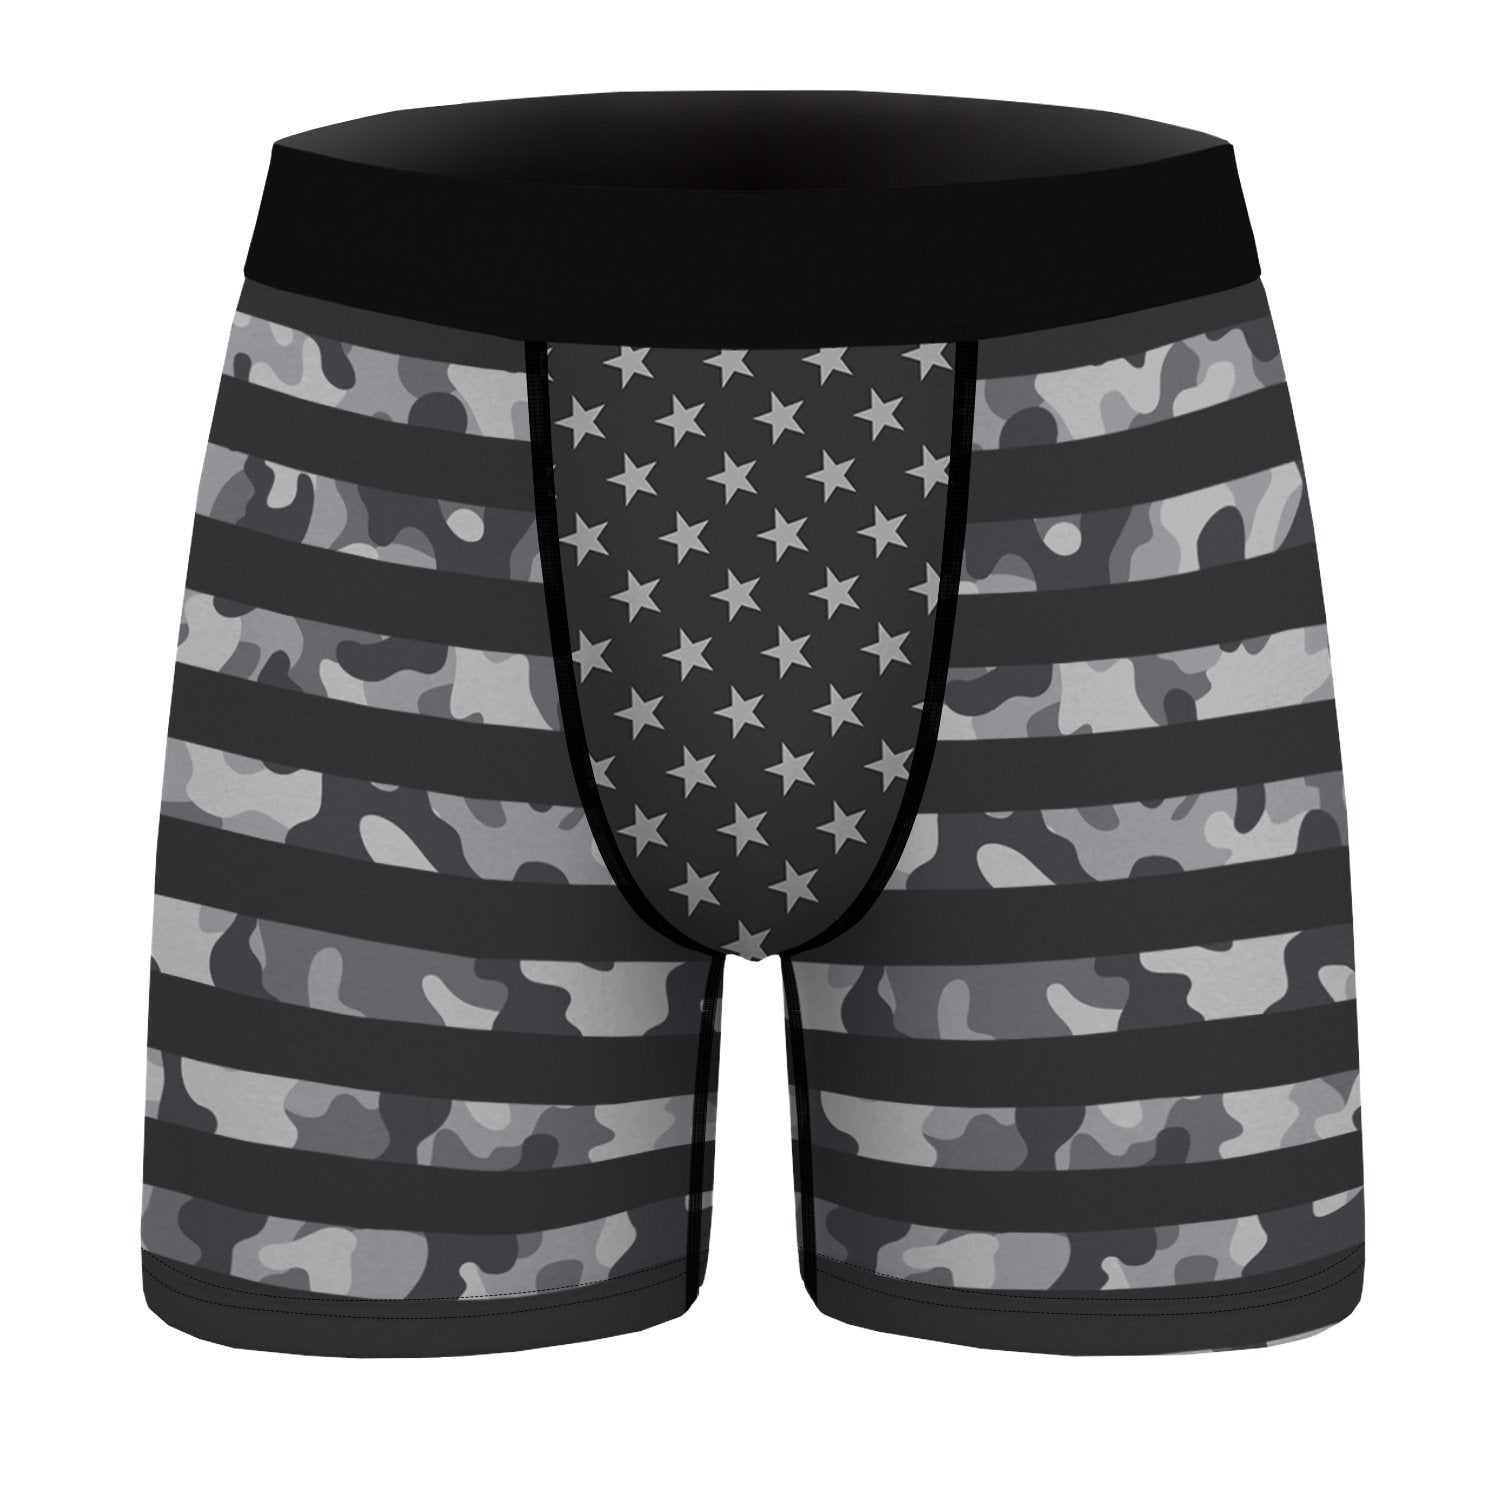 aminibi- Men's American Stars and Stripes Boxer Short Underwear/Underpants